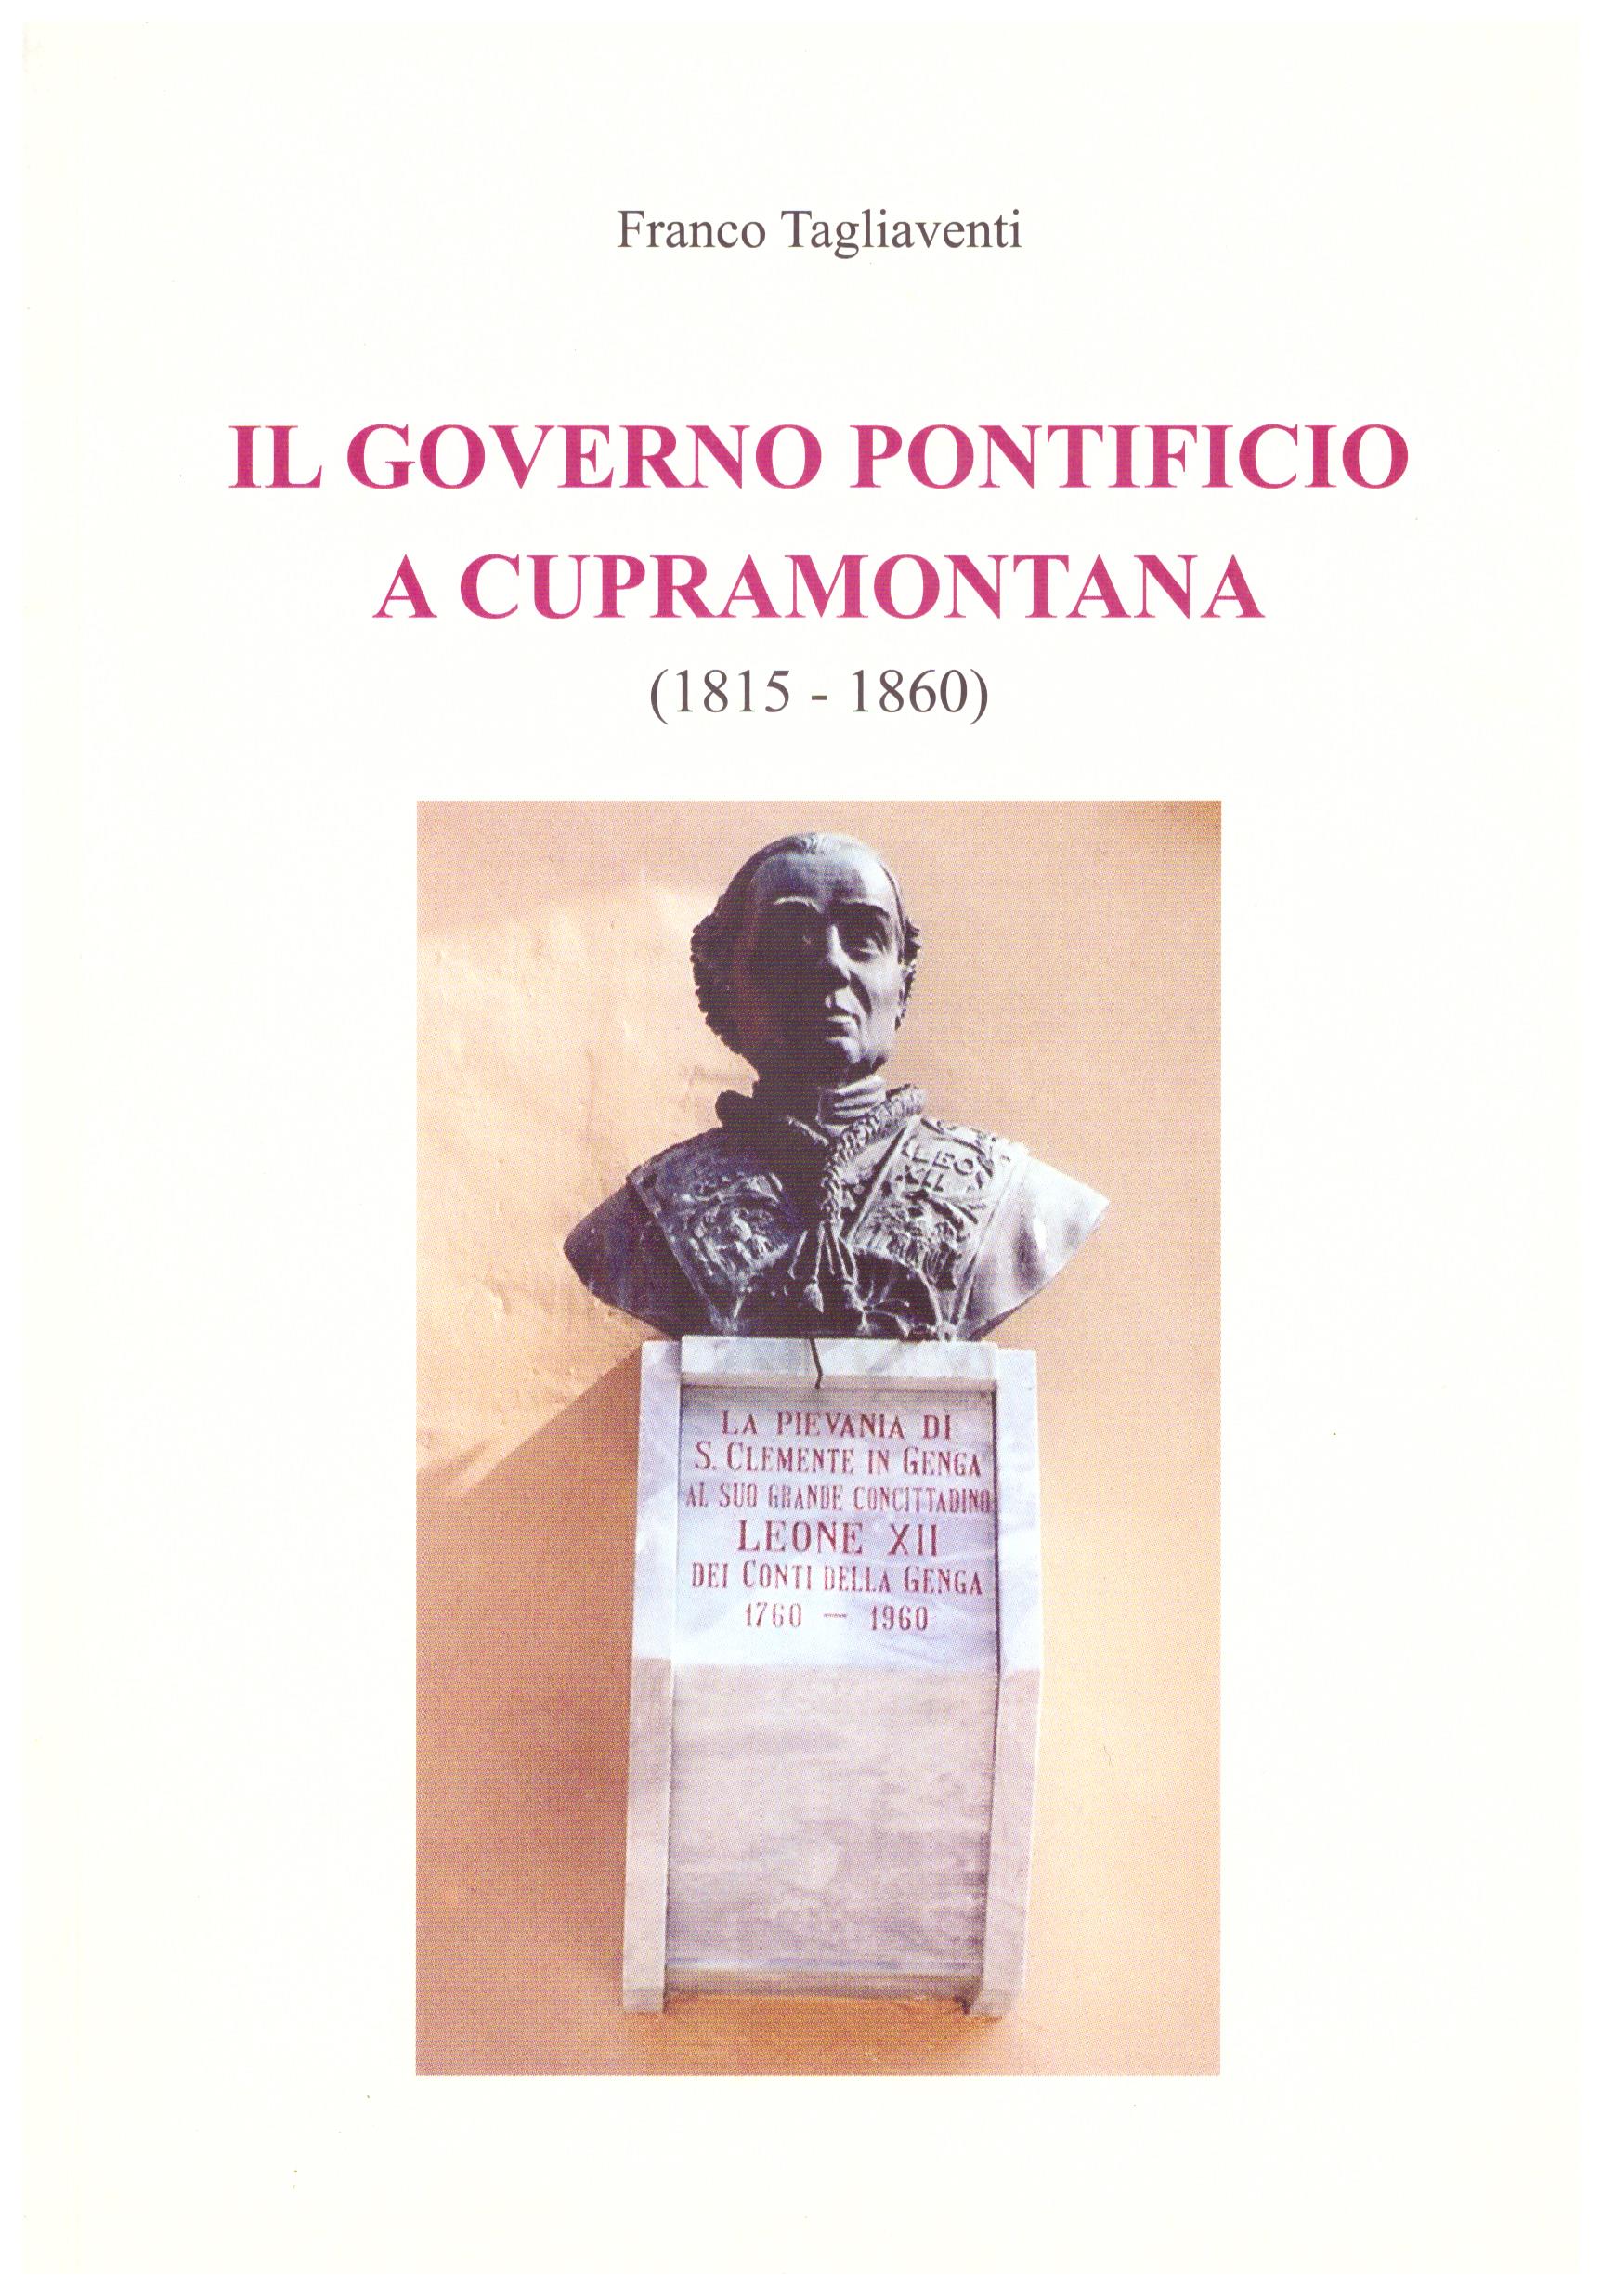 Il governo pontificio a cupramontana (1815 - 1860)